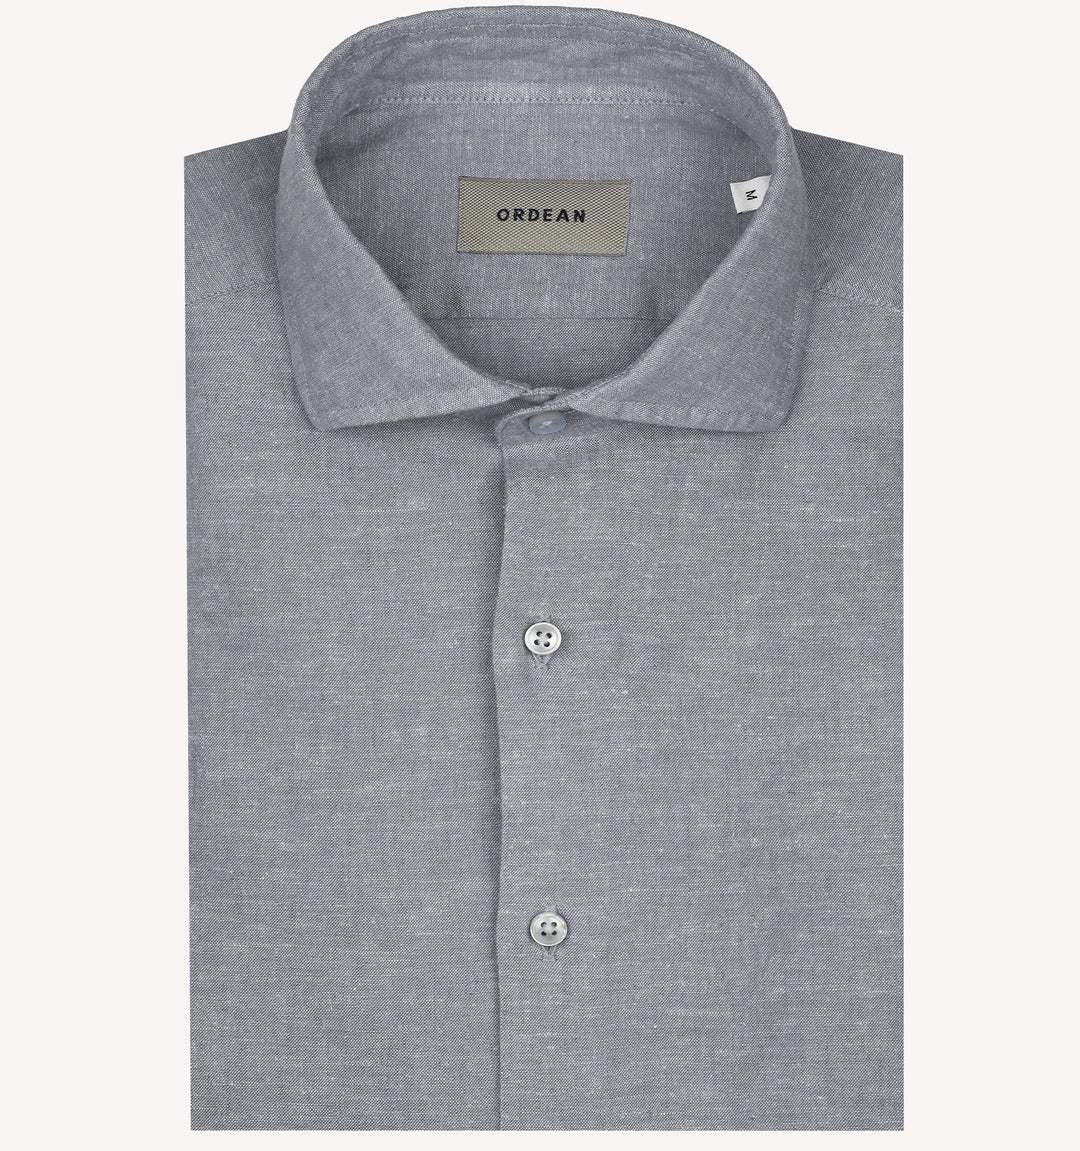 Ordean Sport Shirt in Grey